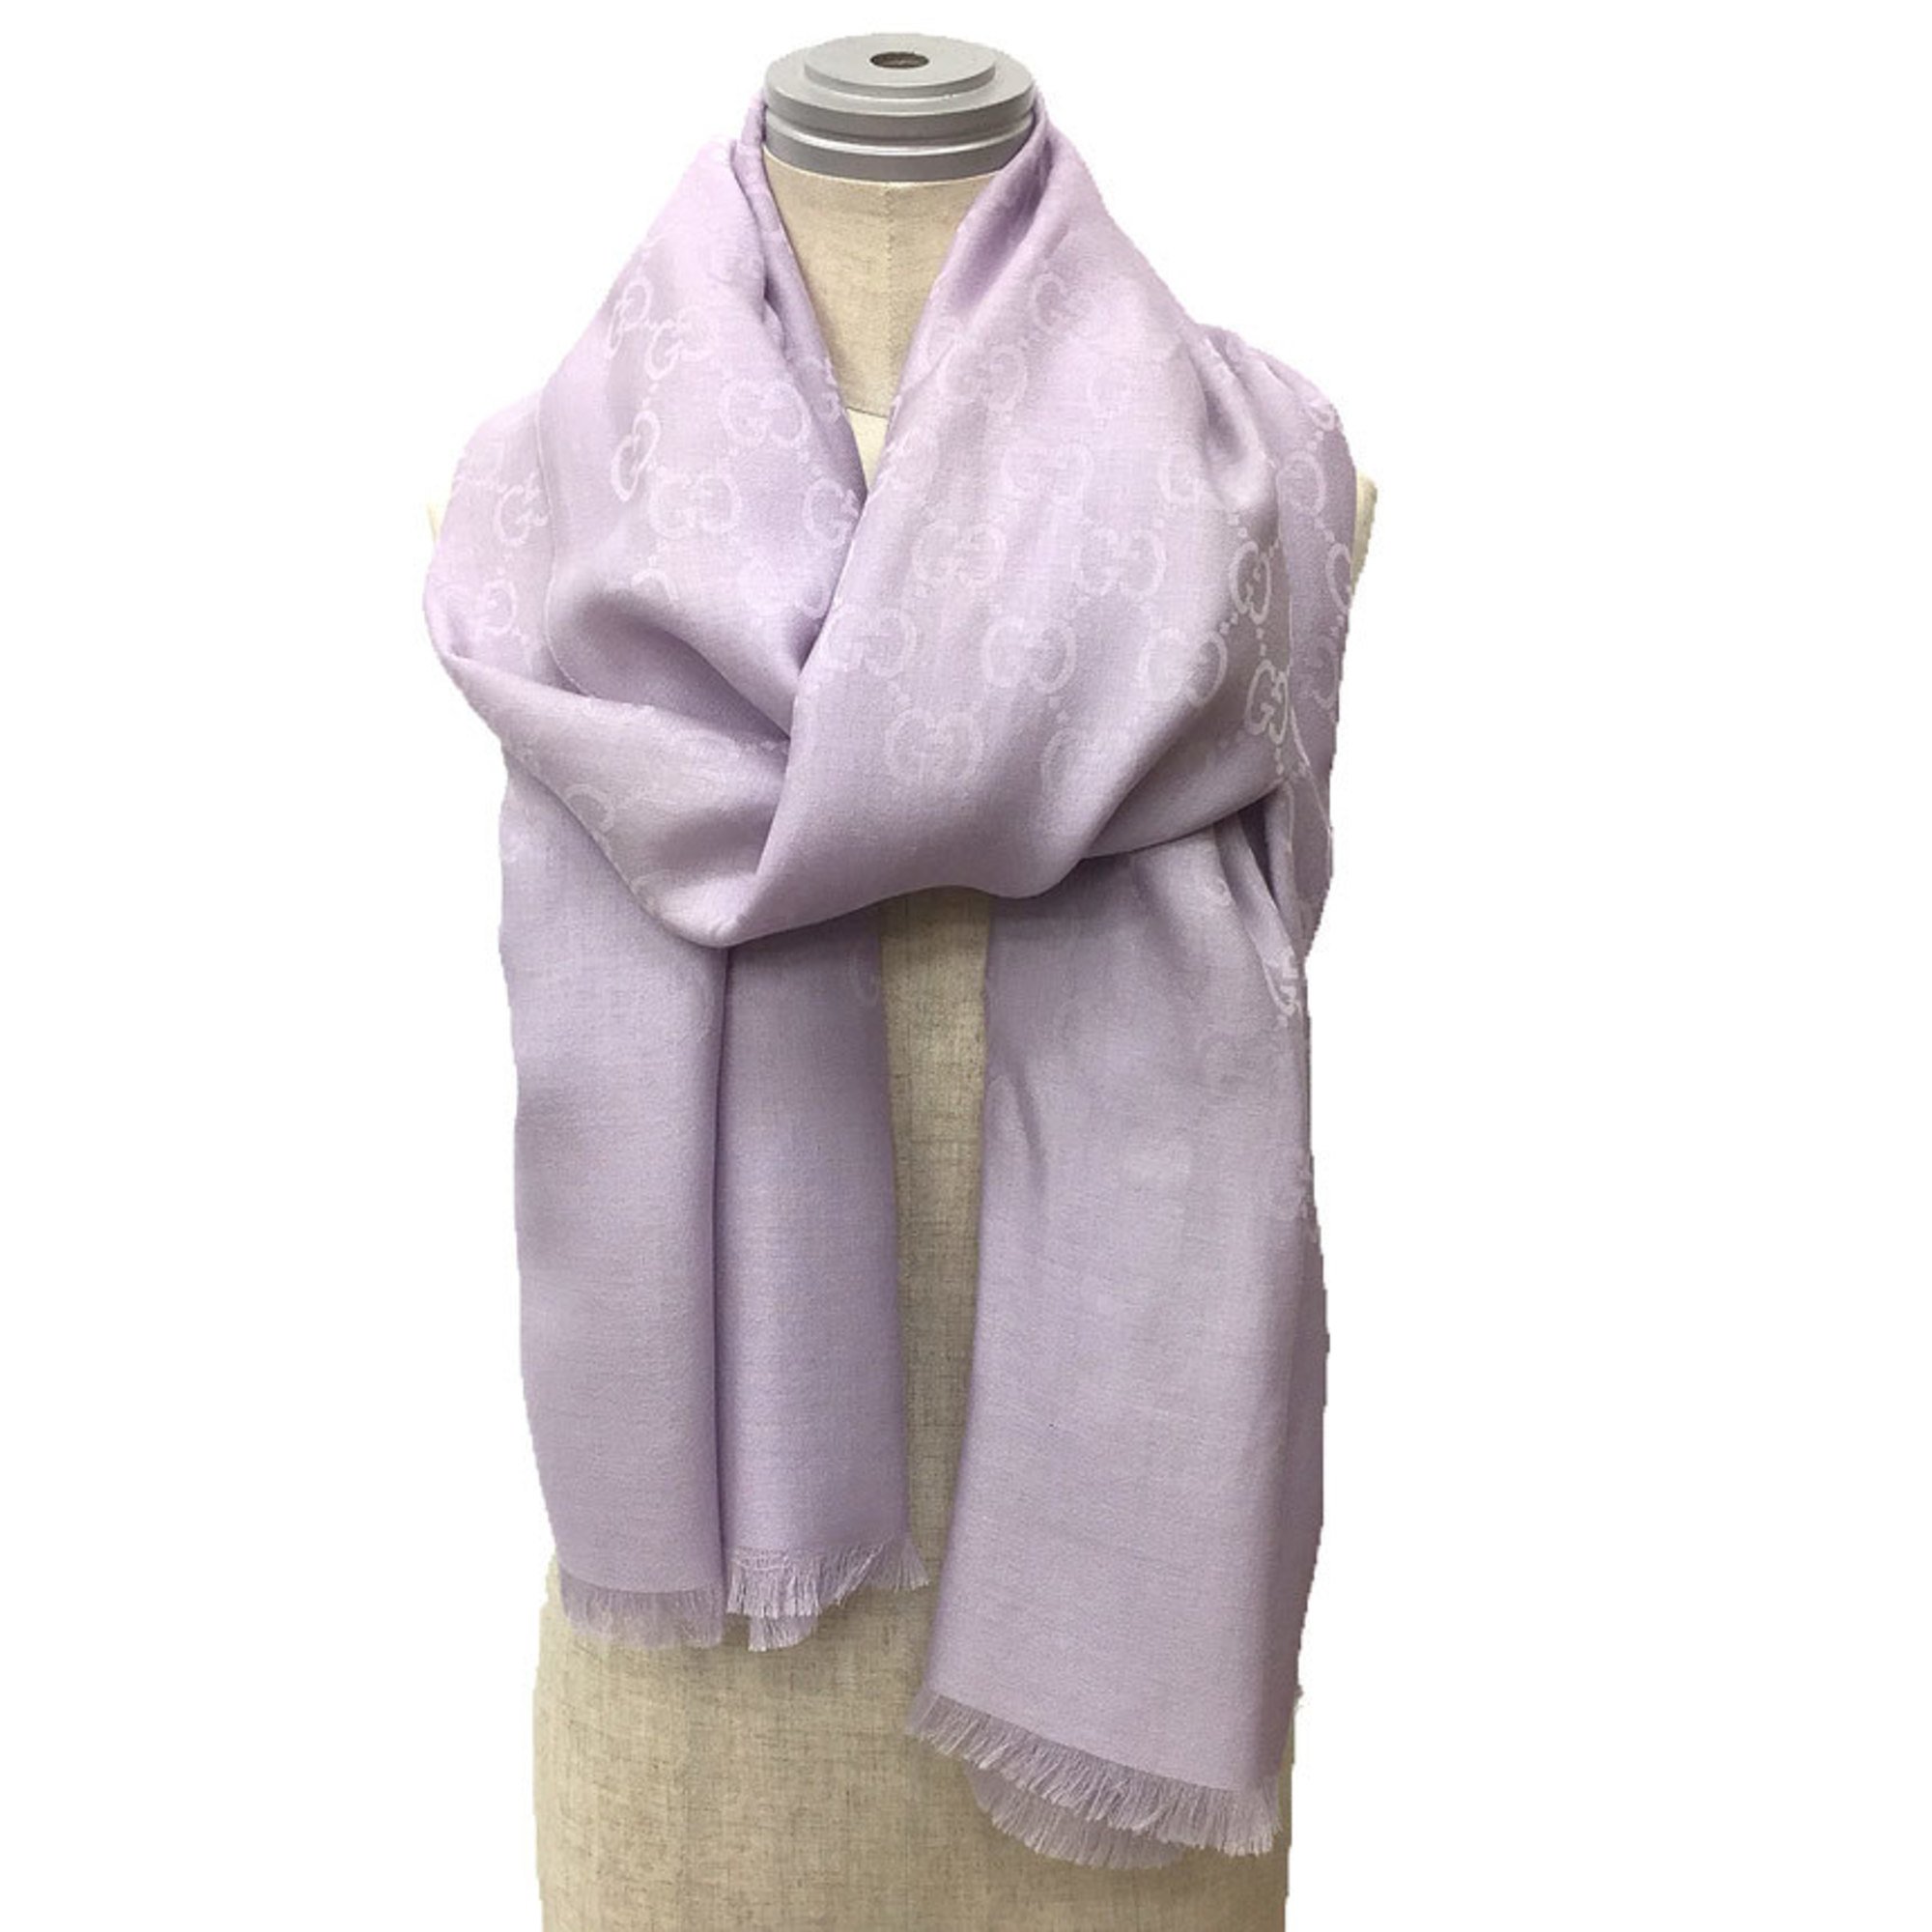 GUCCI Gucci GG stole shawl muffler silk x wool purple aq9986 10009436